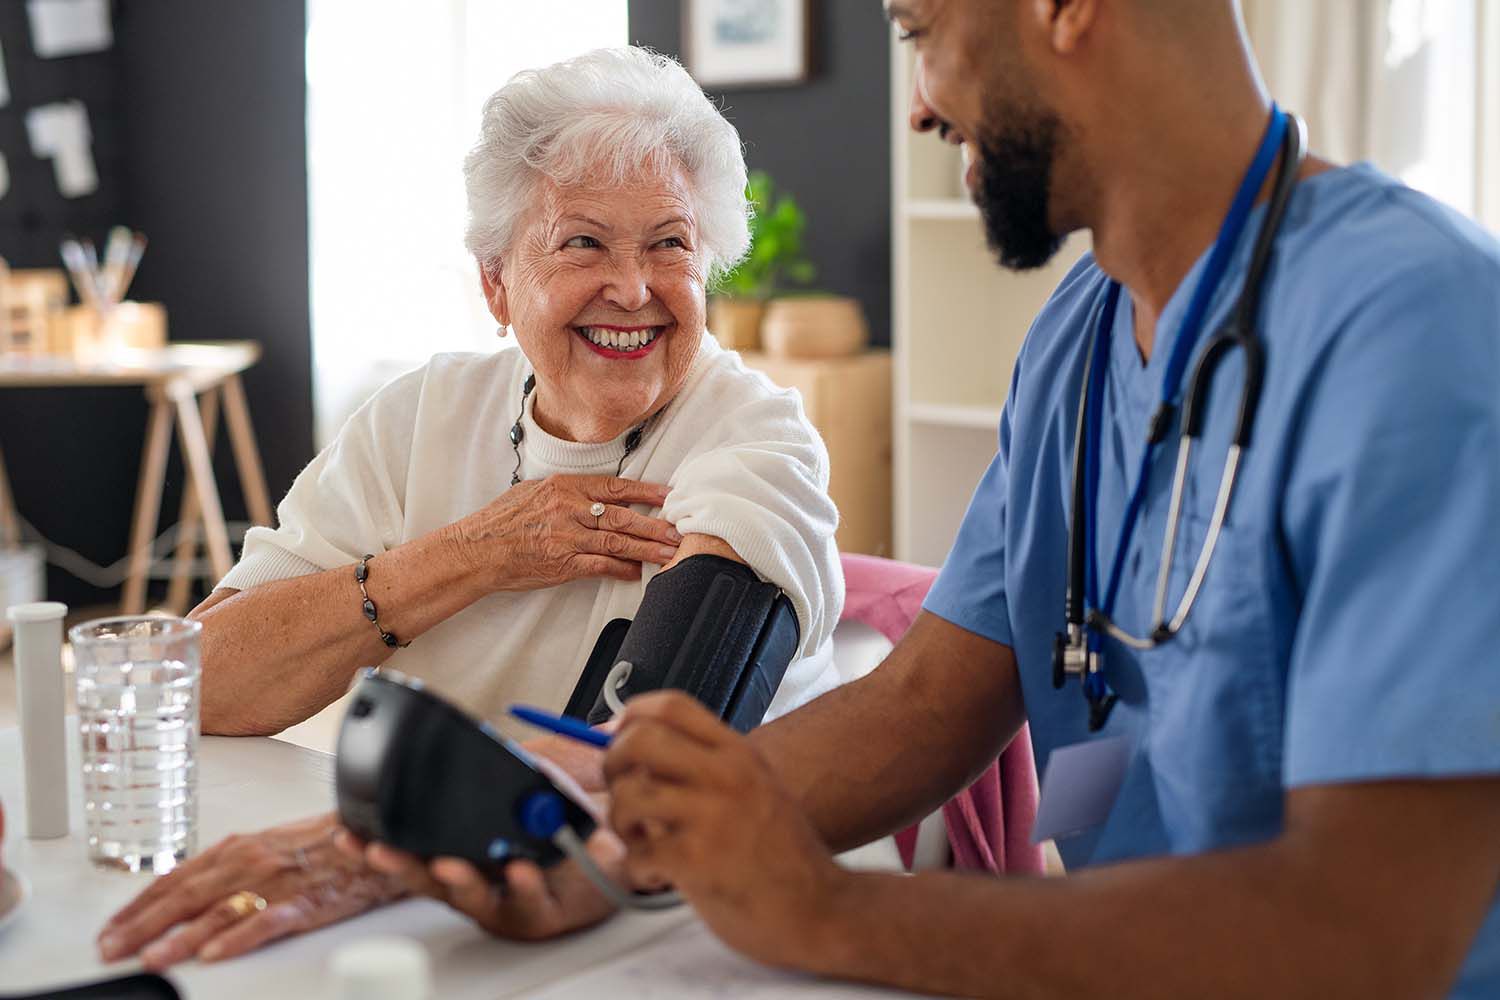 Medicare health care plans for seniors